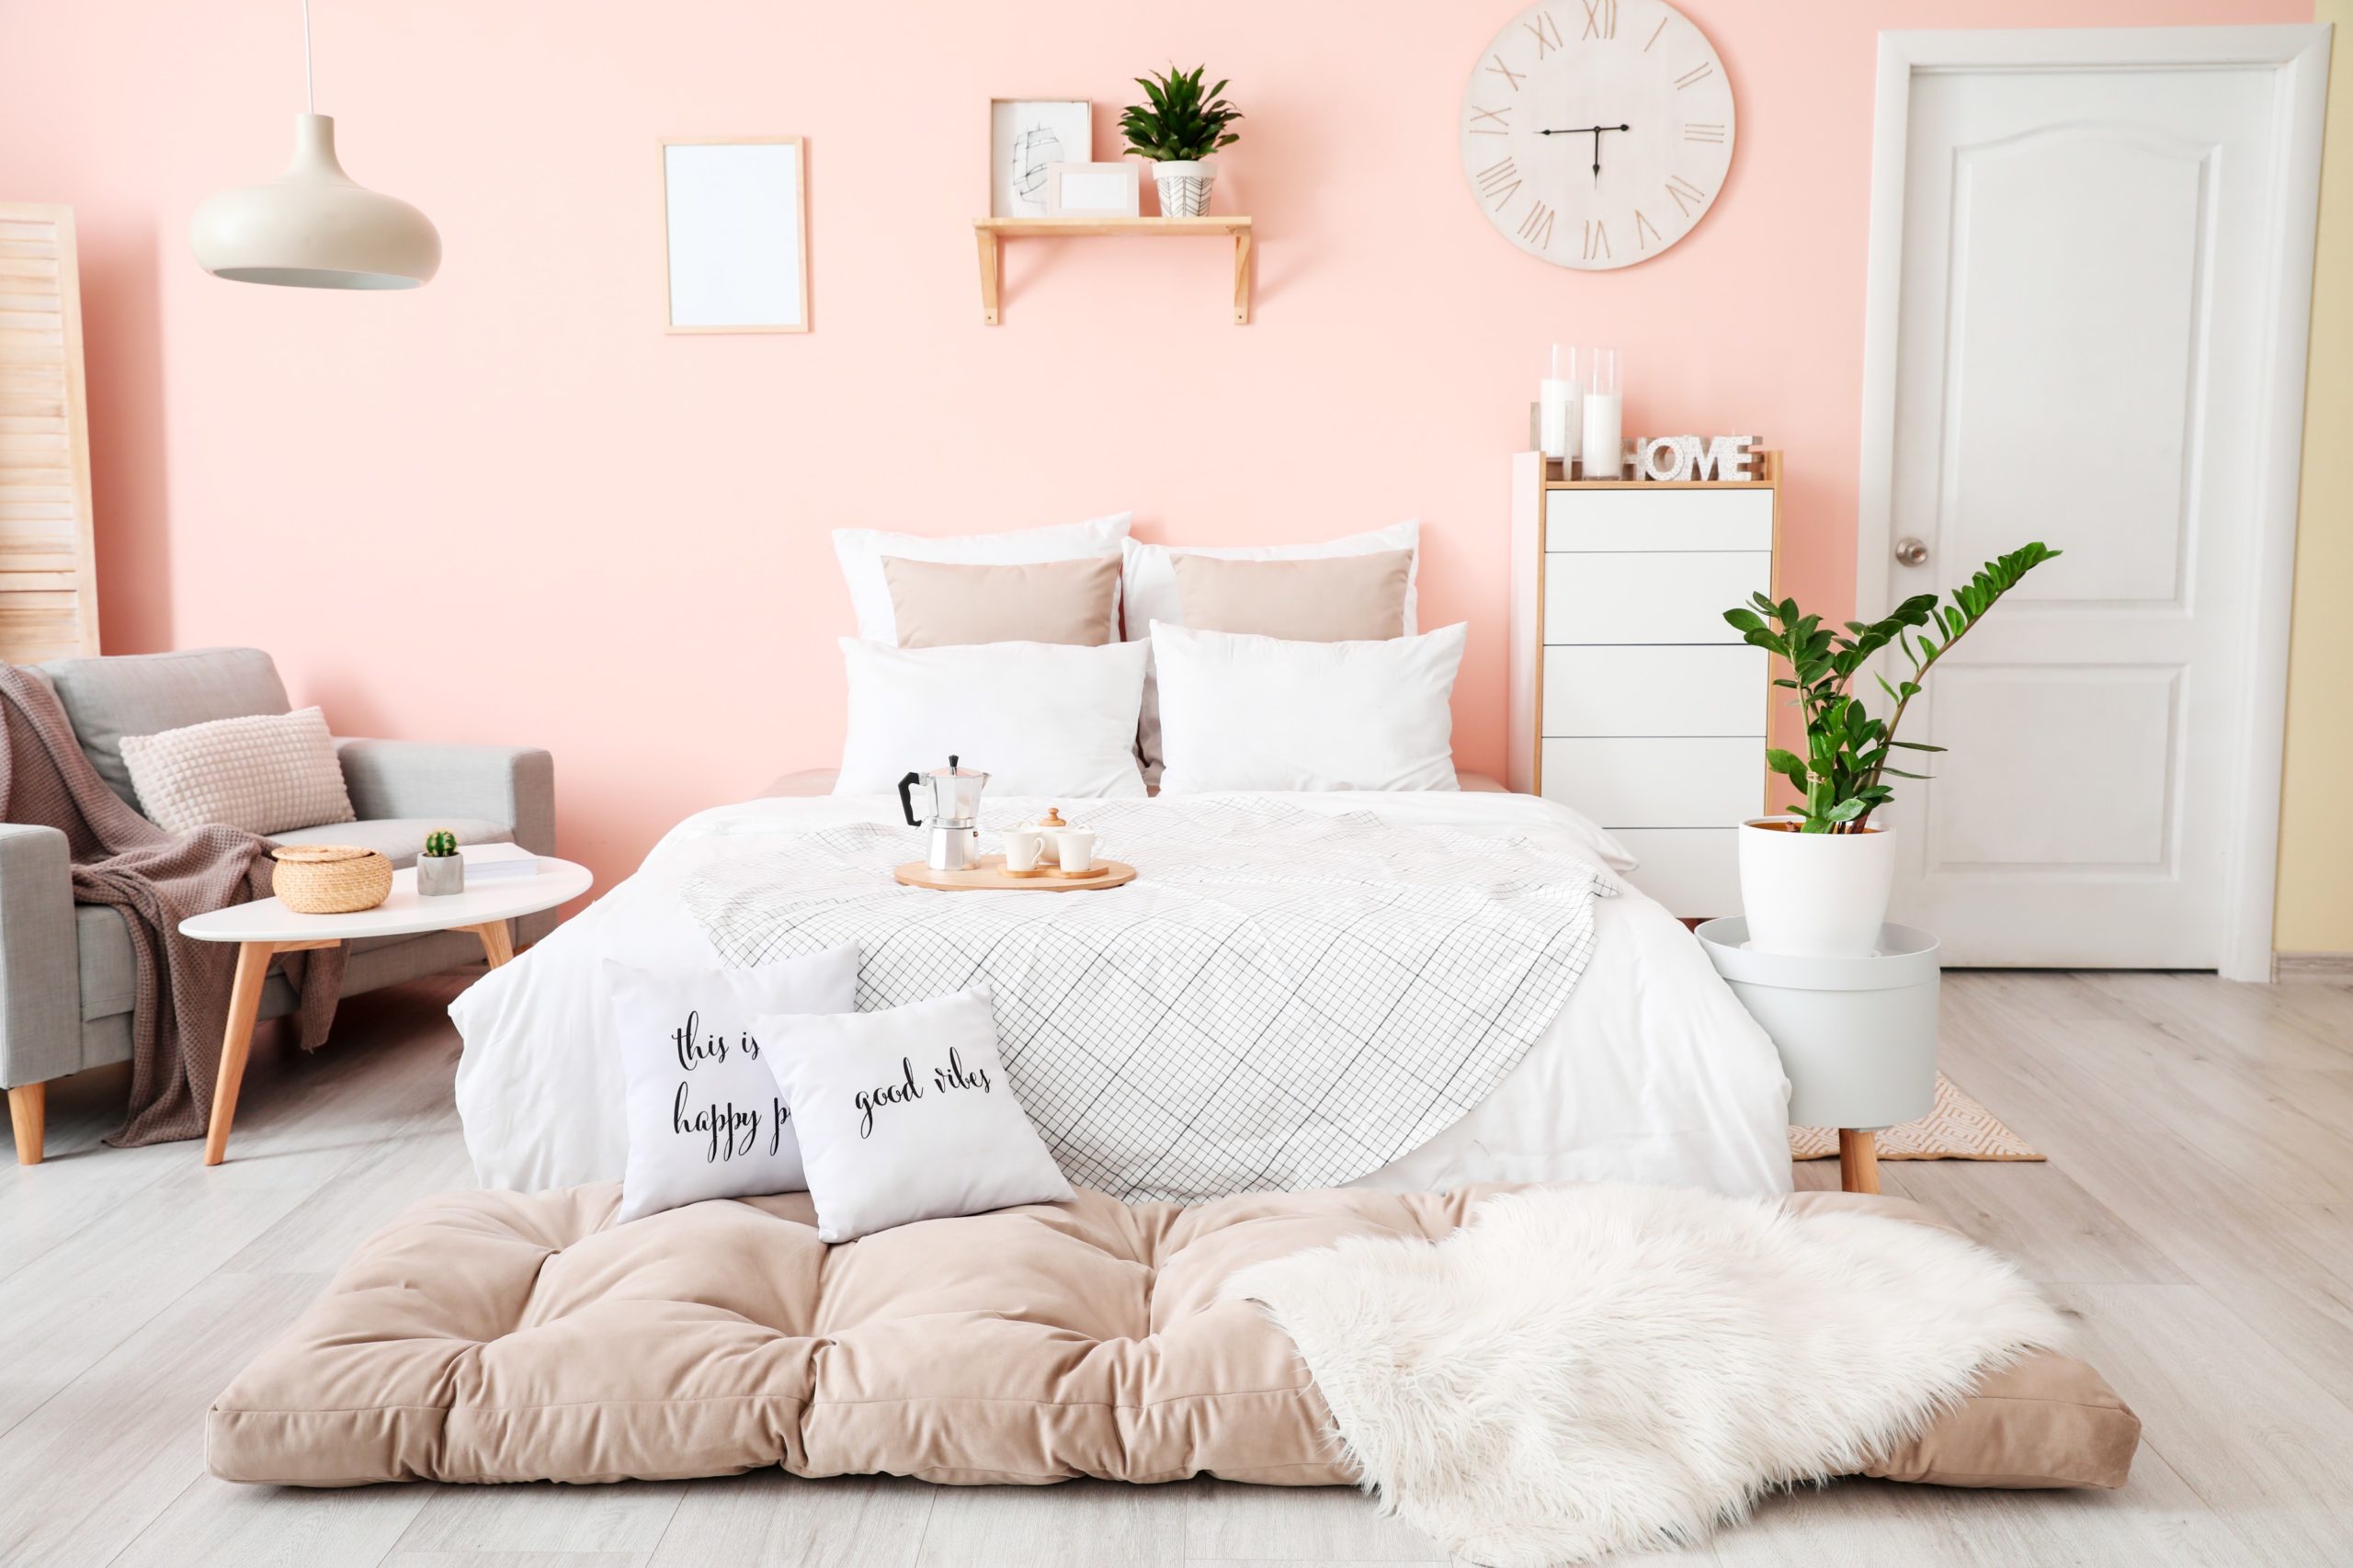 <img src="stylish.jpg" alt="stylish light pink room with cozy blankets"/> 